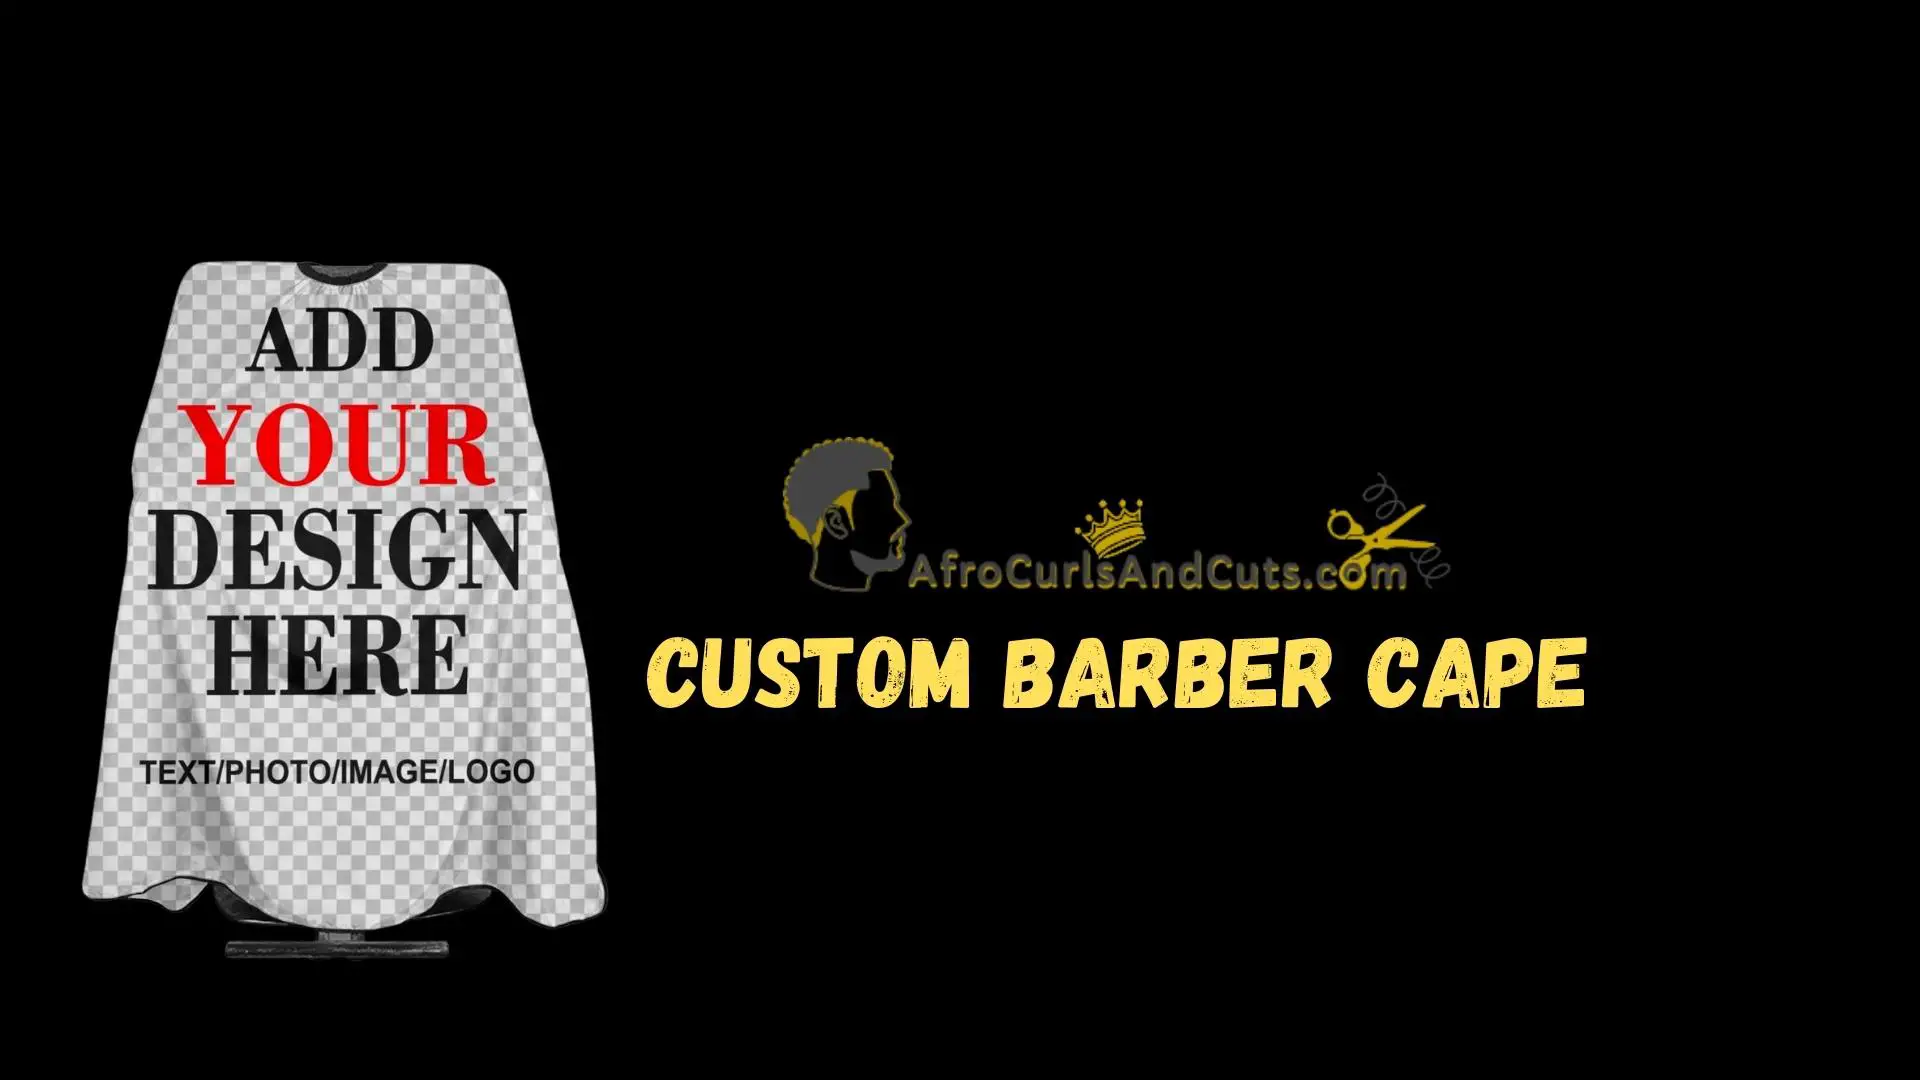 Custom Barber Cape for building a brand